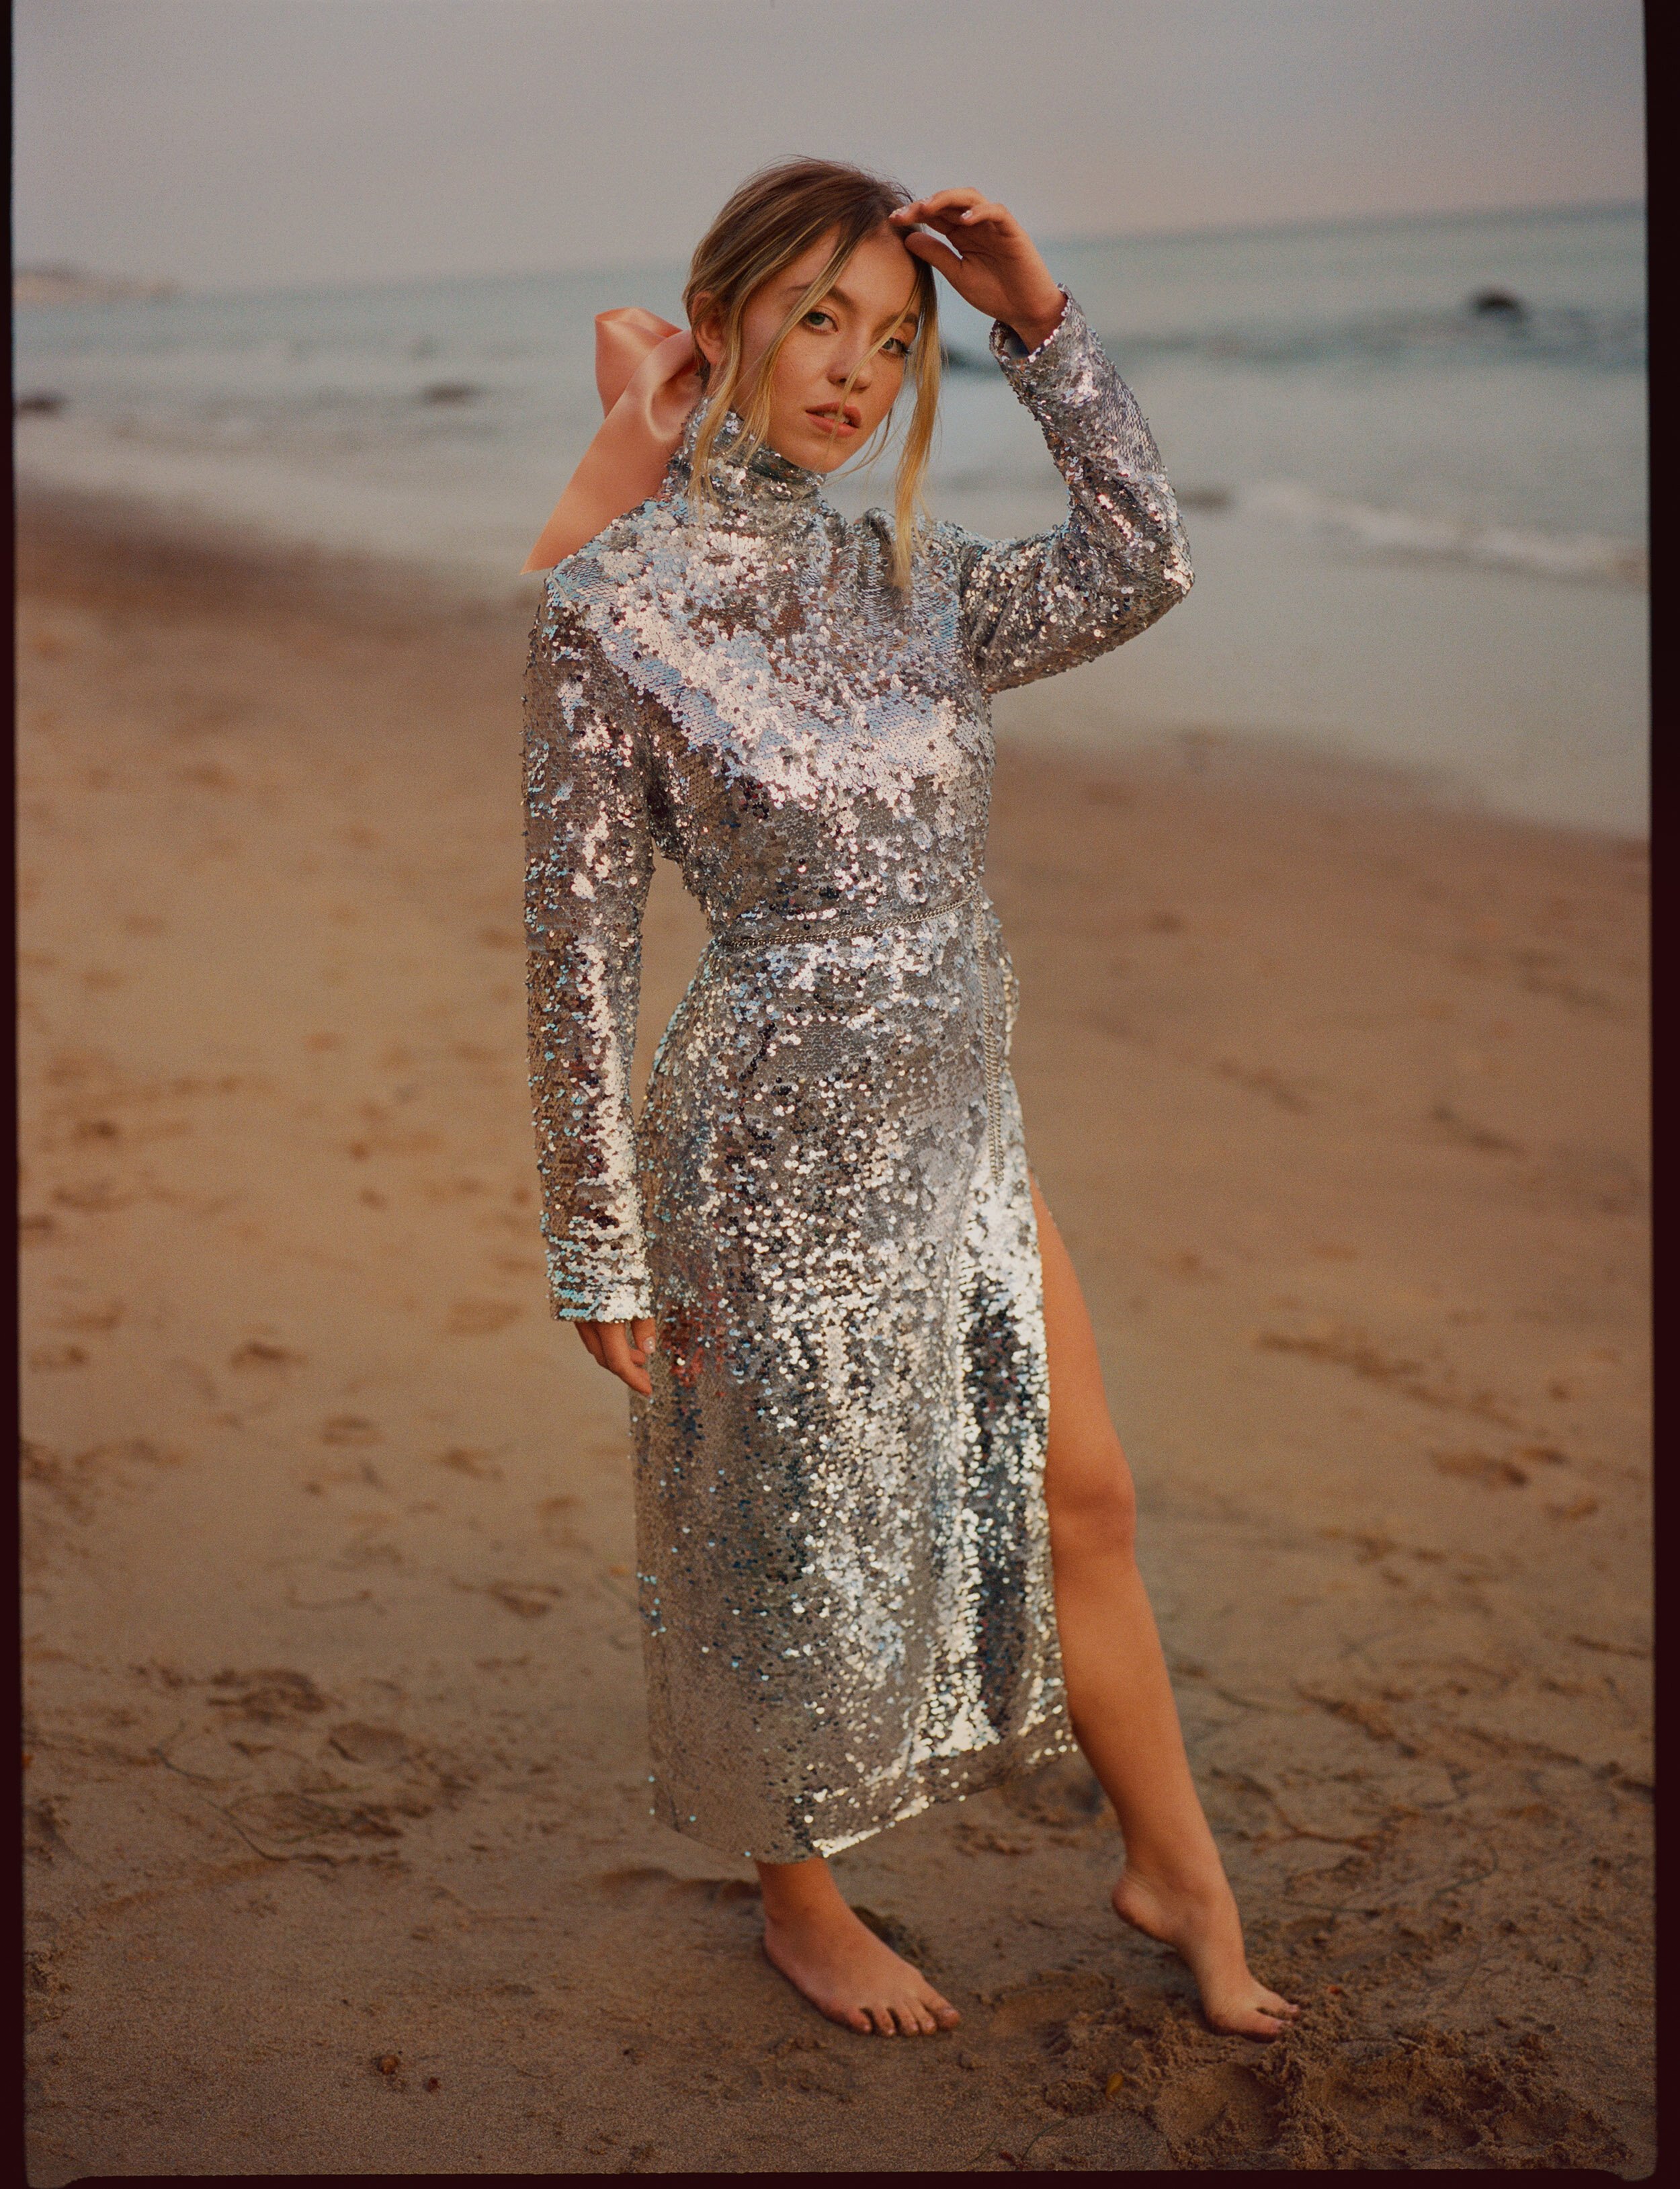 sydney-sweeney-beach-sequin-dress.jpeg